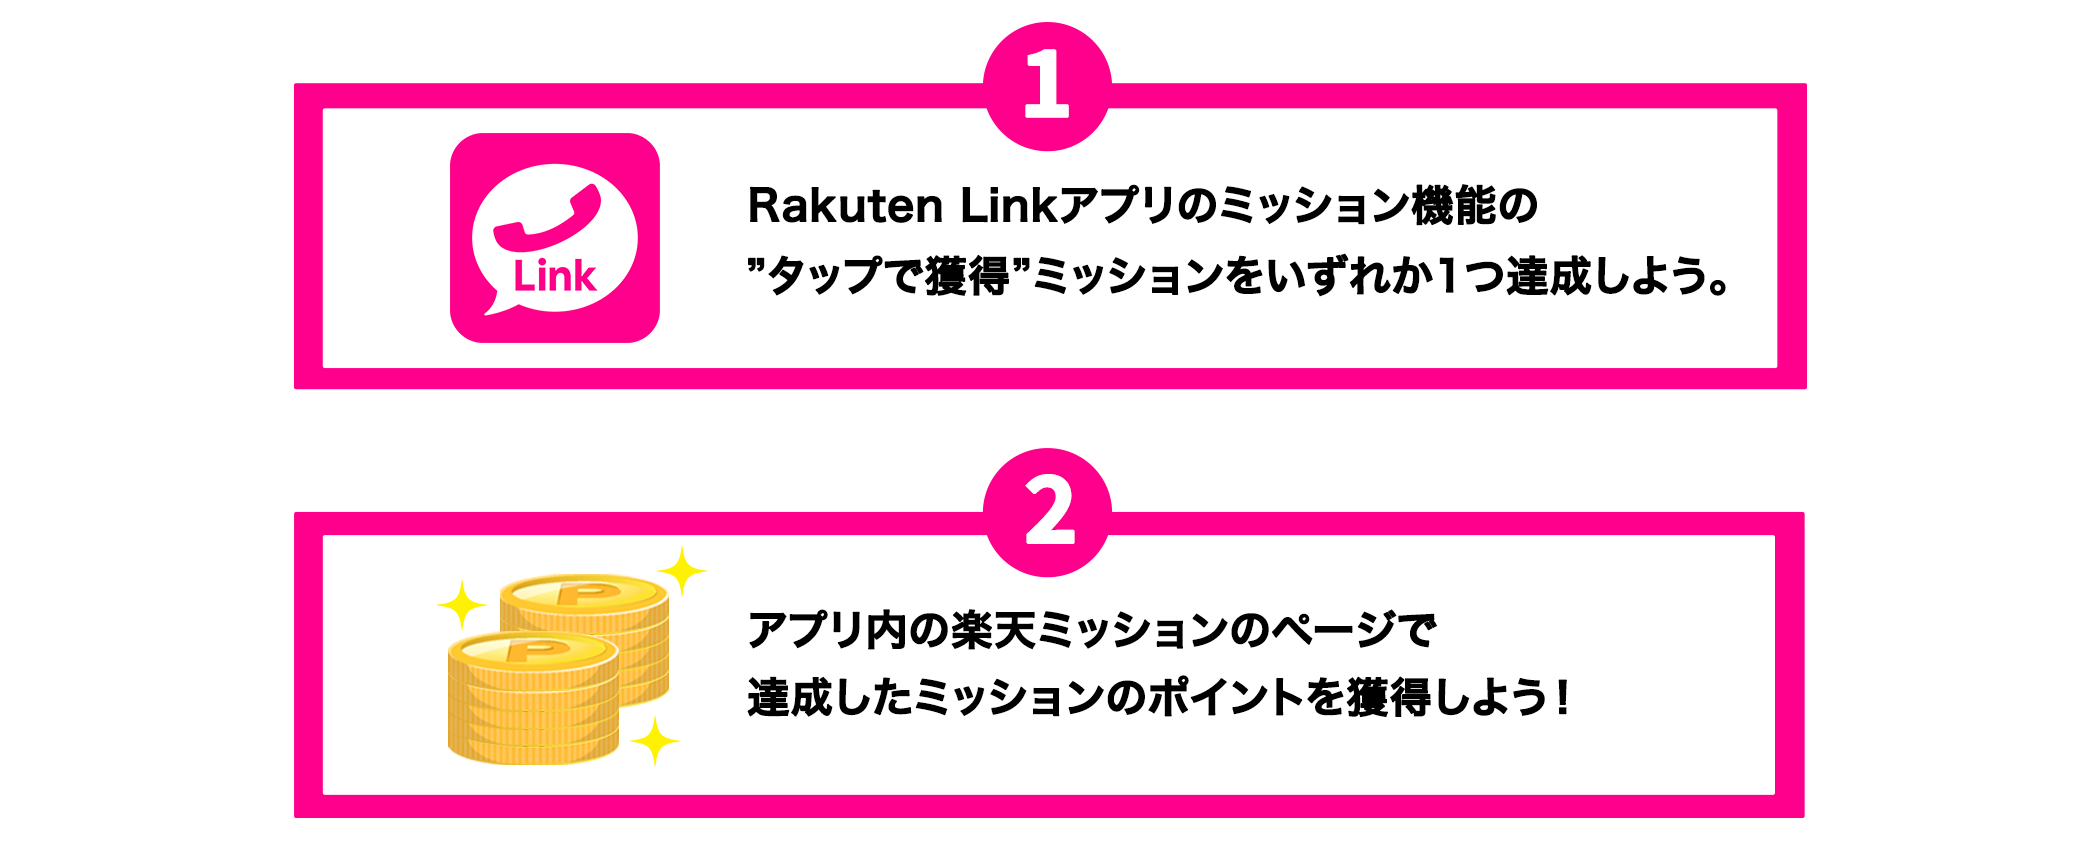 1 Rakuten Linkアプリのミッション機能の”タップで獲得”ミッションをいずれか1つ達成しよう。 2 アプリ内の楽天ミッションのページで達成したミッションのポイントを獲得しよう！